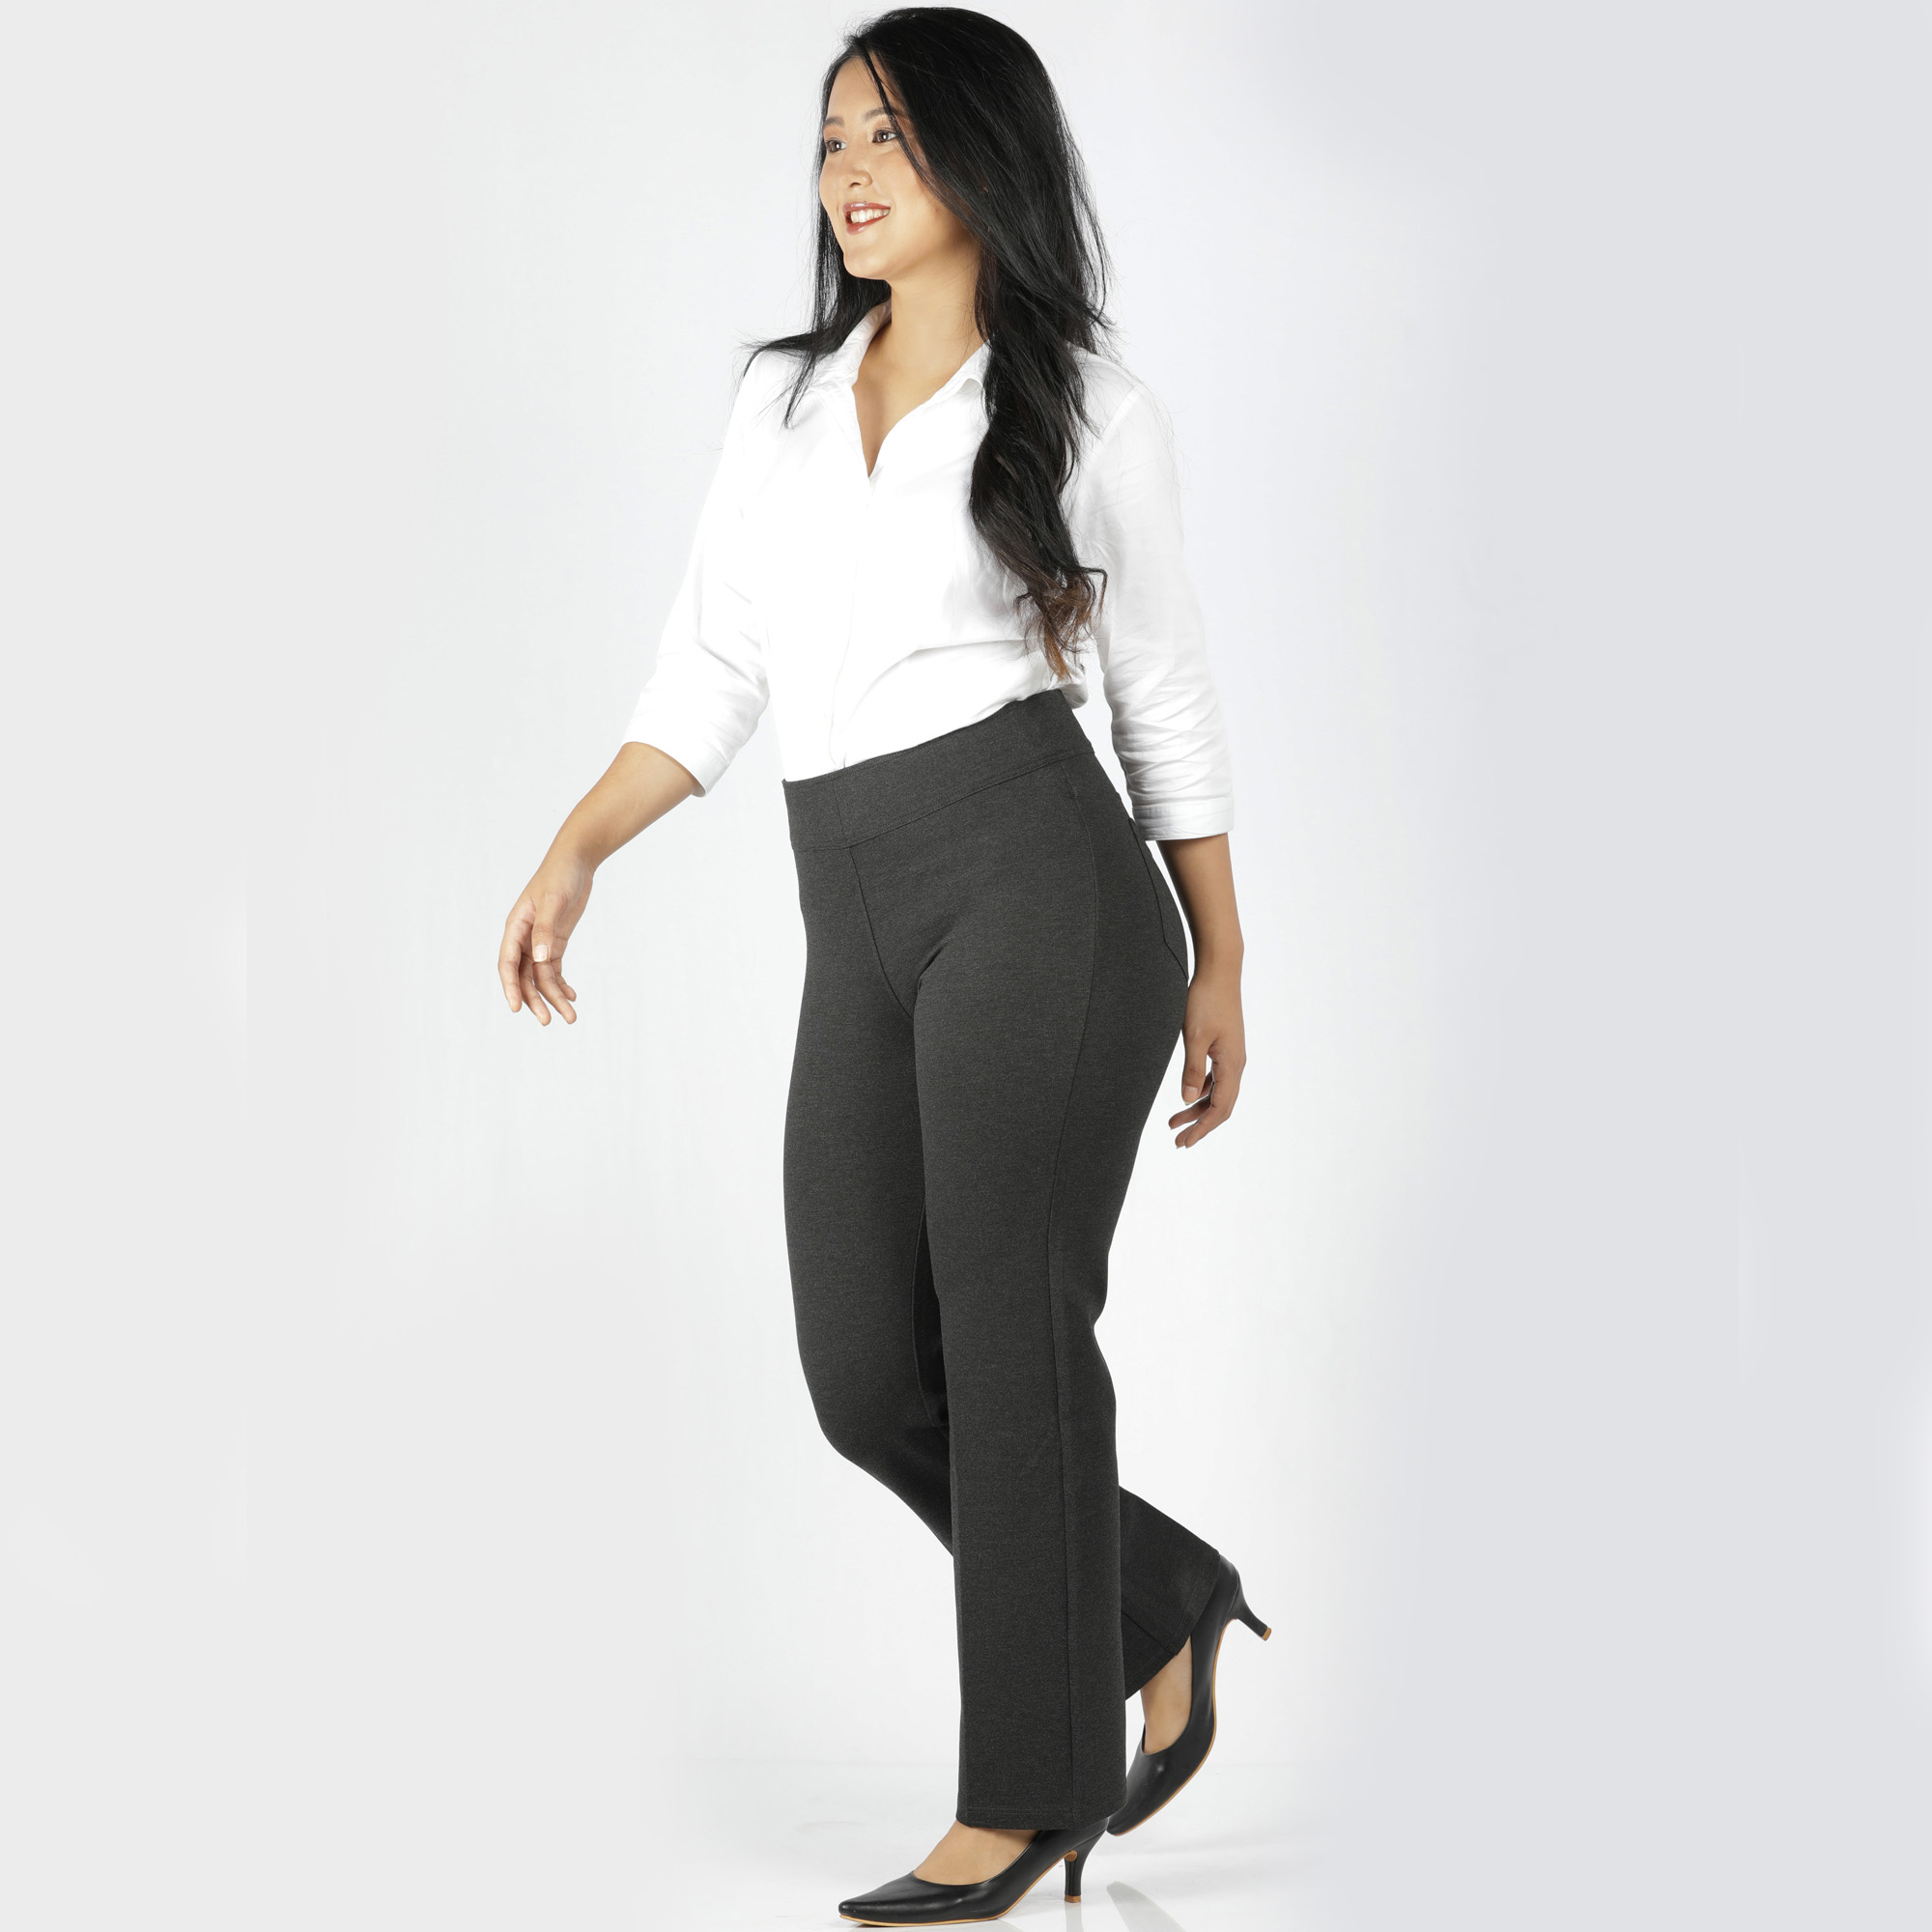 Khaki pants for women - Tummy tucker straight leg-2 back pockets - Belore  Slims